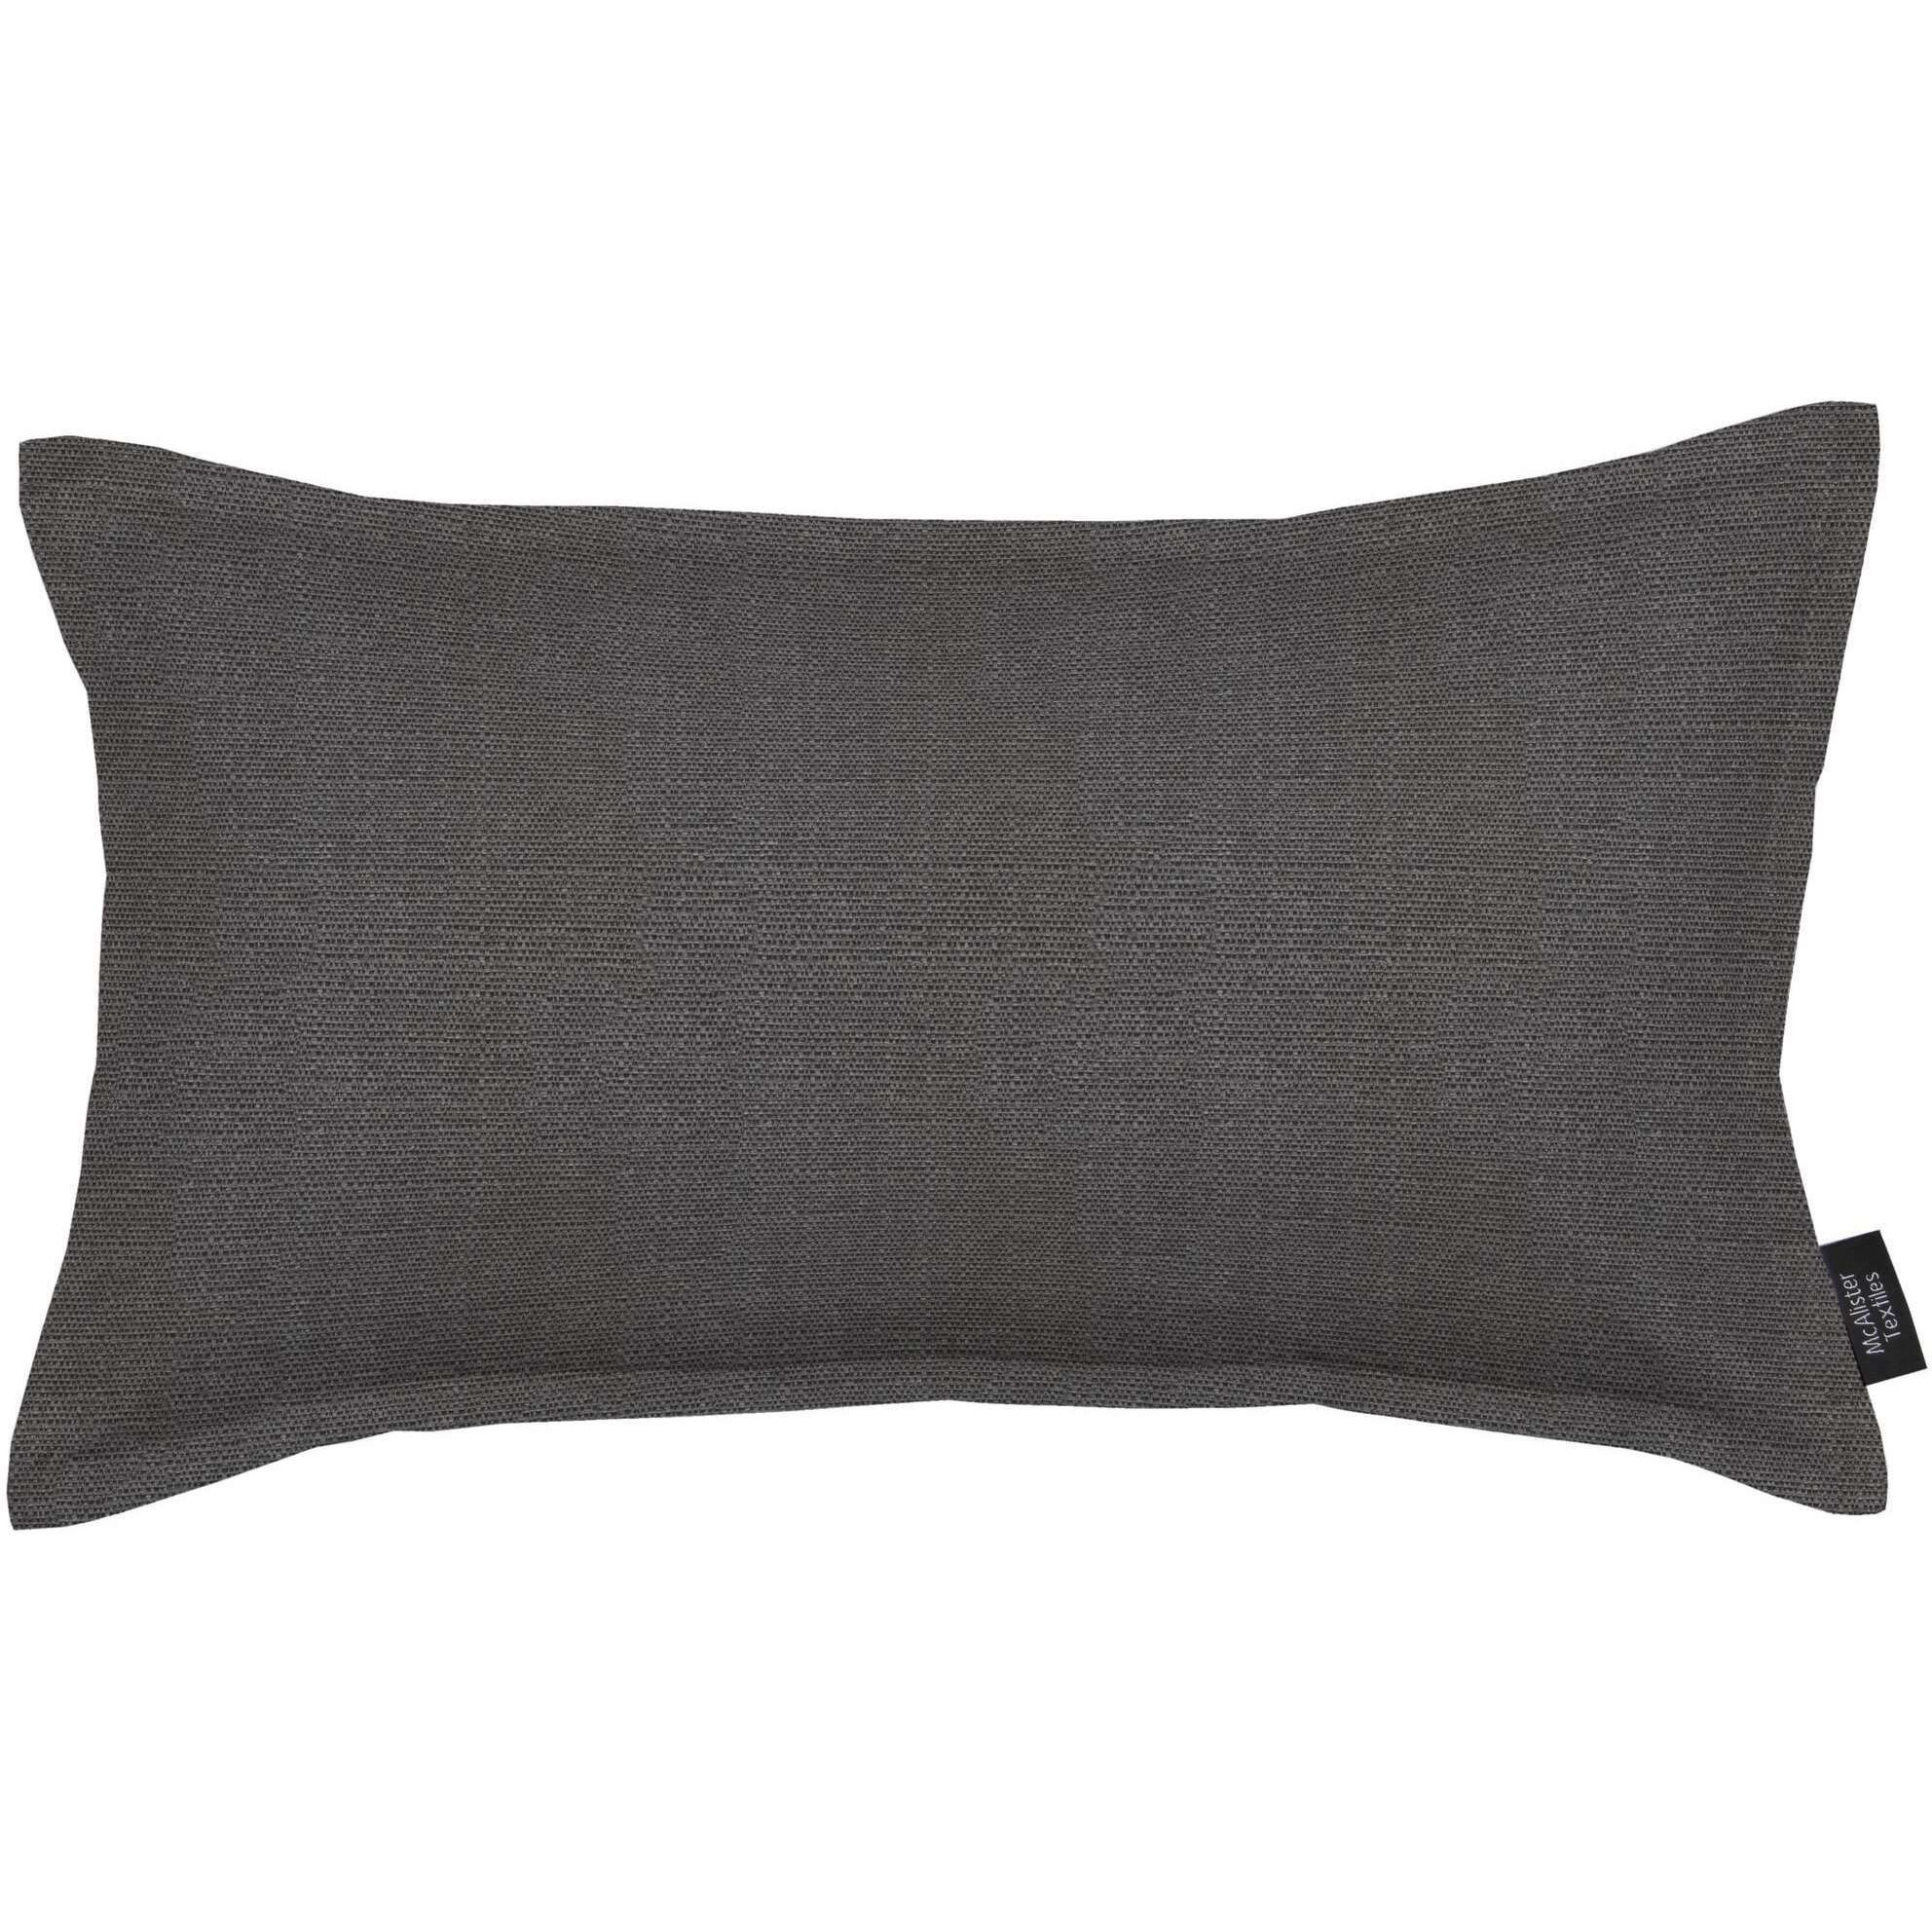 Savannah Charcoal Grey Cushion, Polyester Filler / 50cm x 30cm